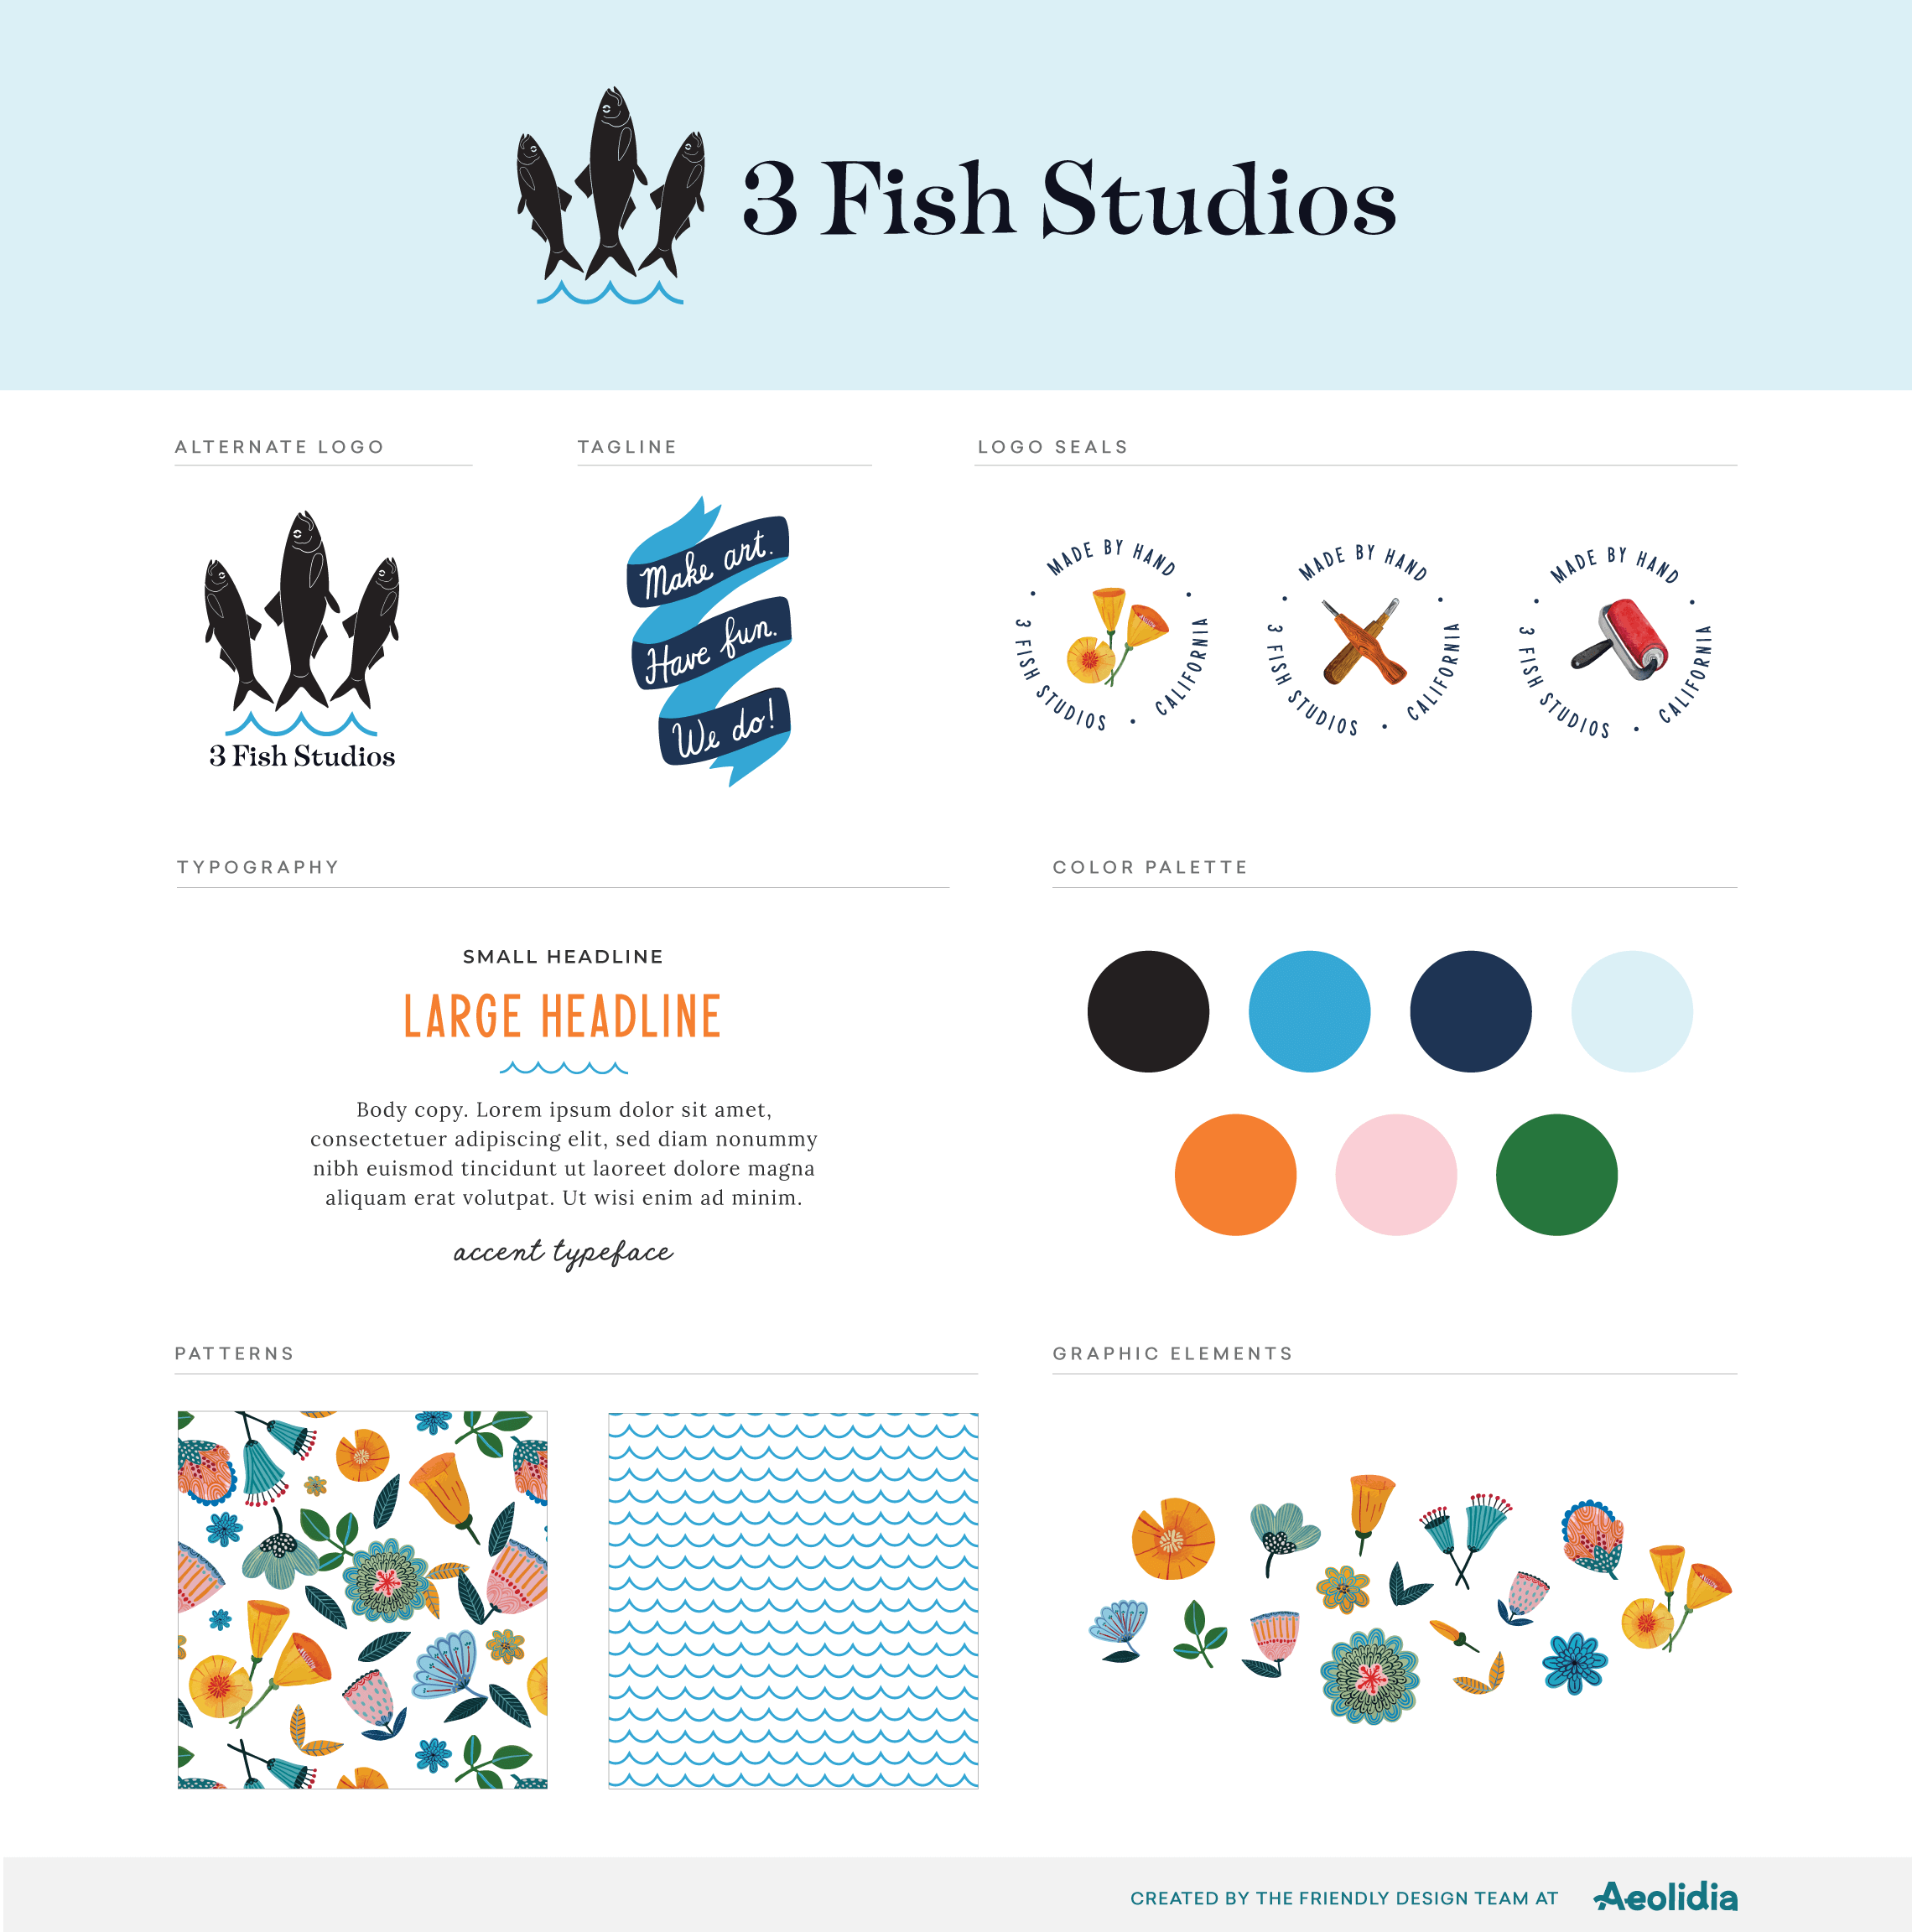 Brand identity guide for an artist studio.